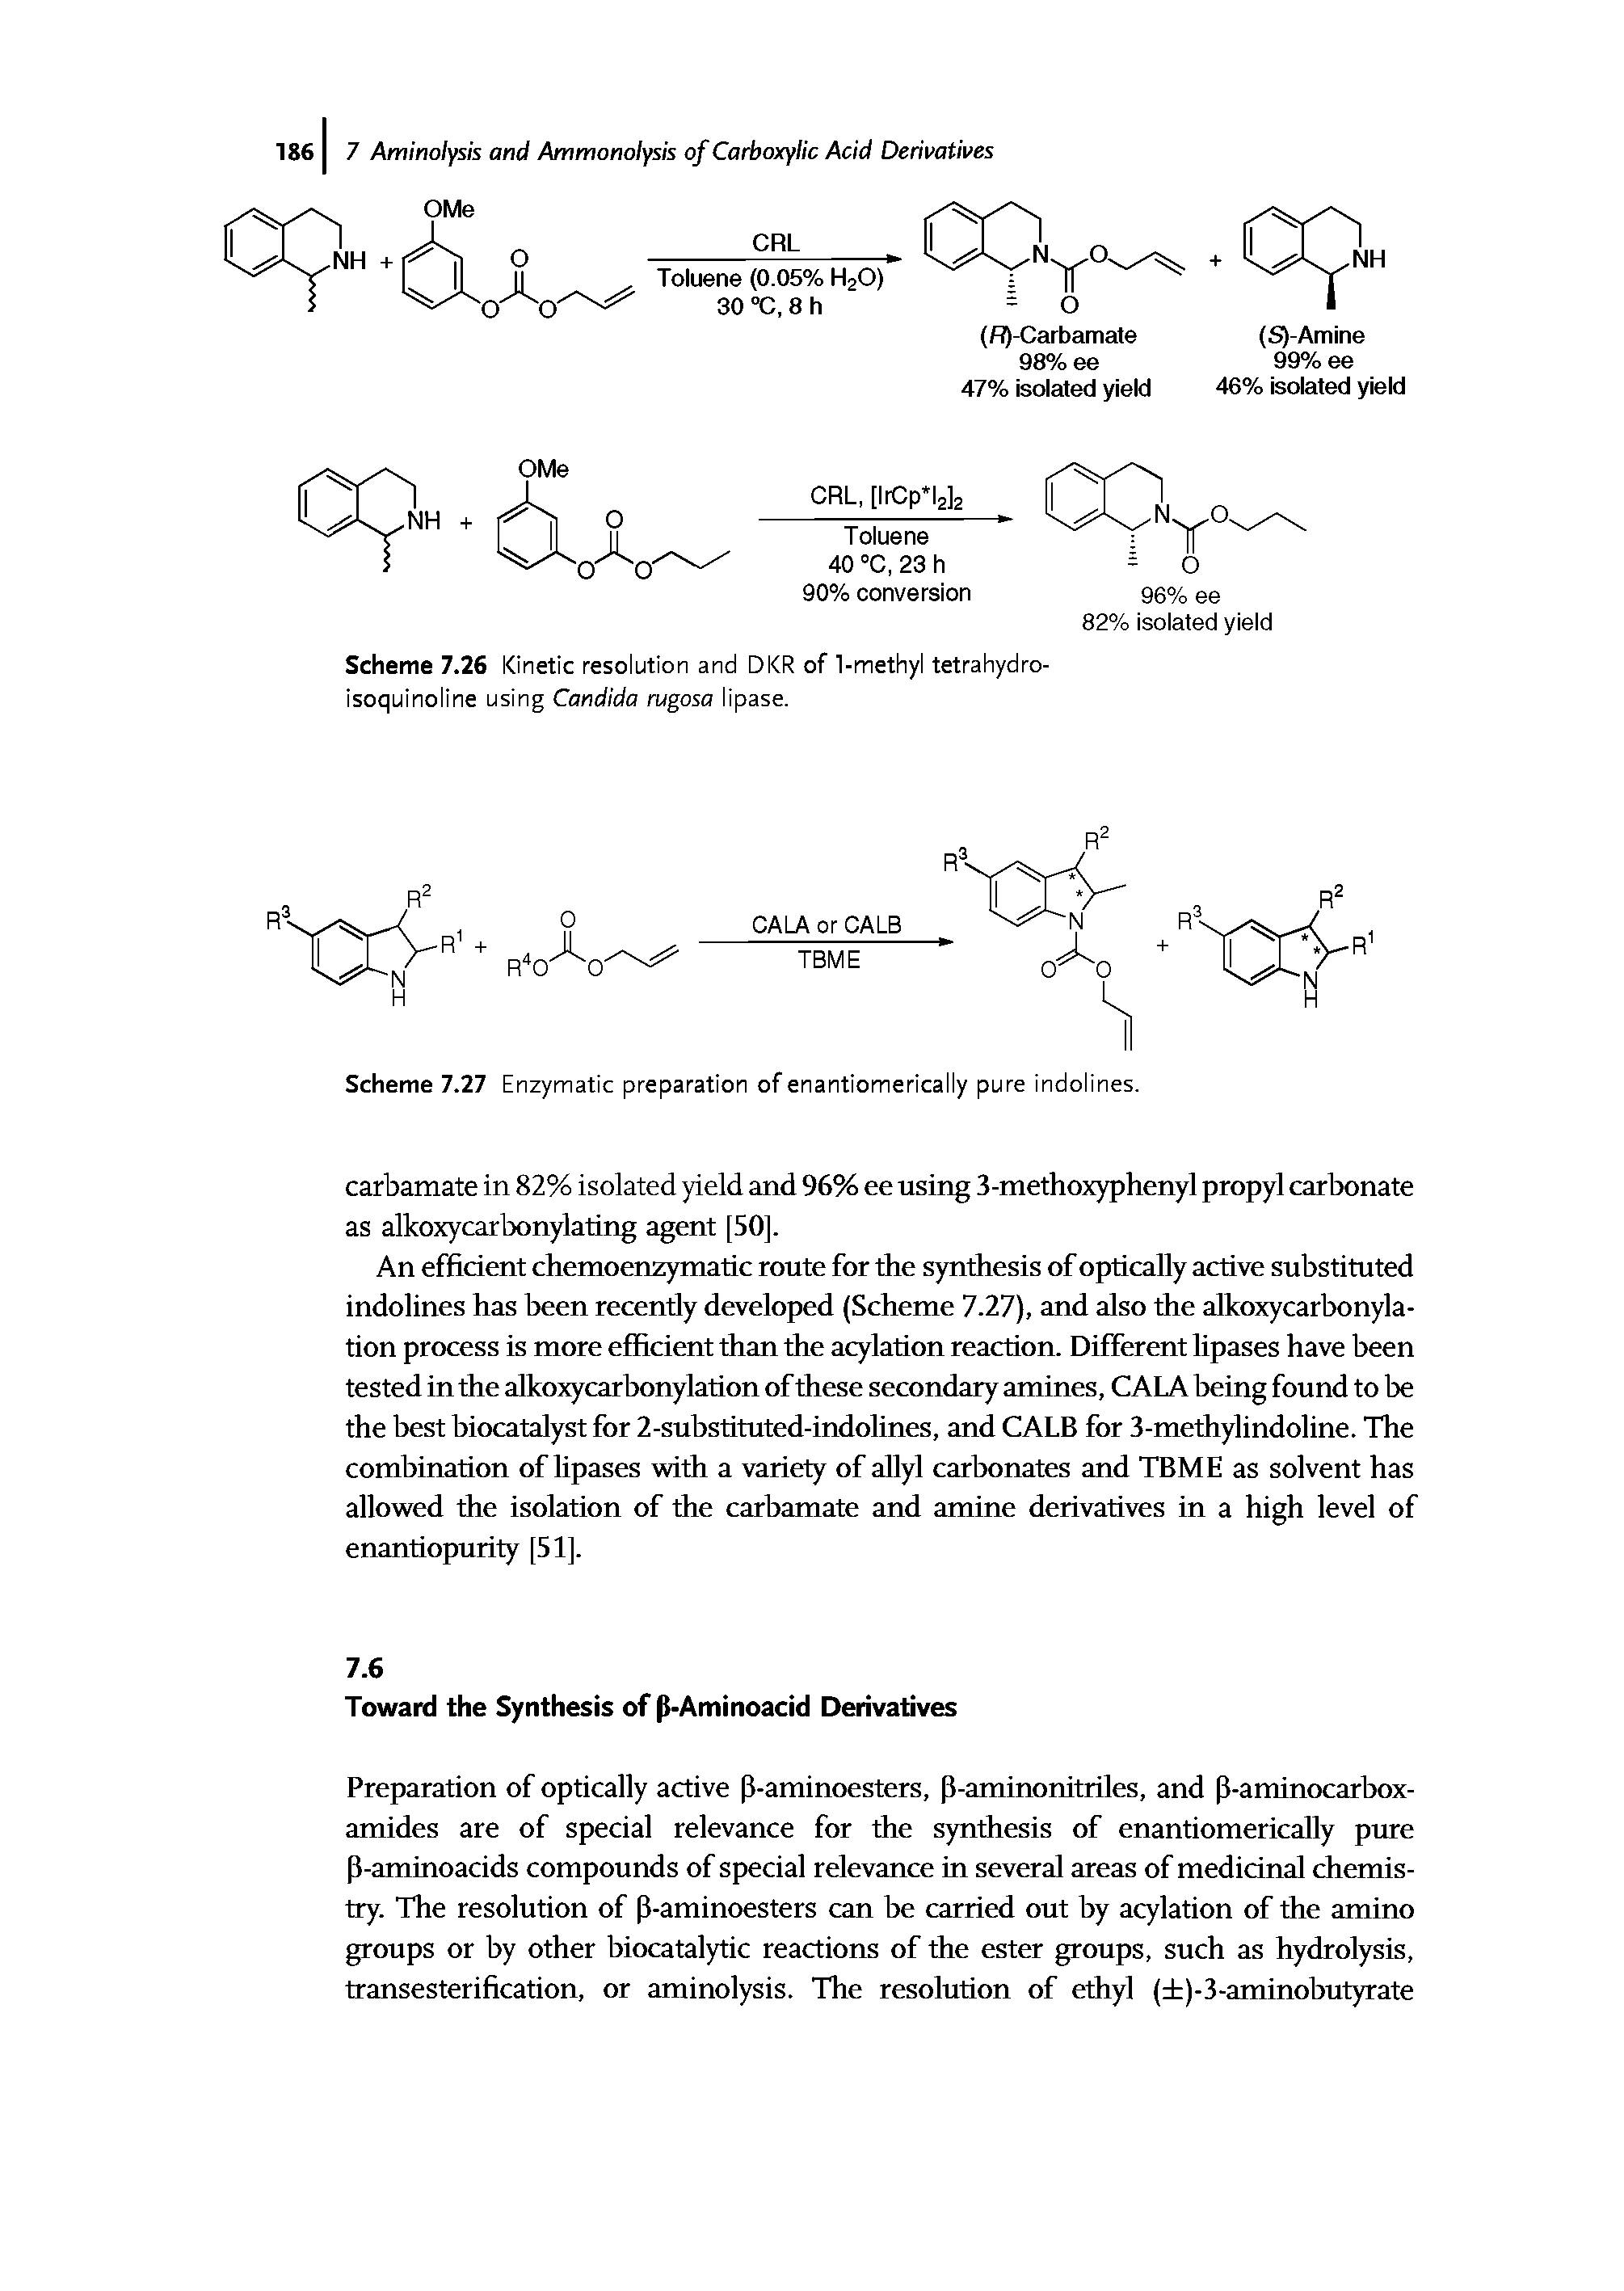 Scheme 7.26 Kinetic resolution and DKR of 1-methyl tetrahydro-isoquinoline using Candida rugosa lipase.